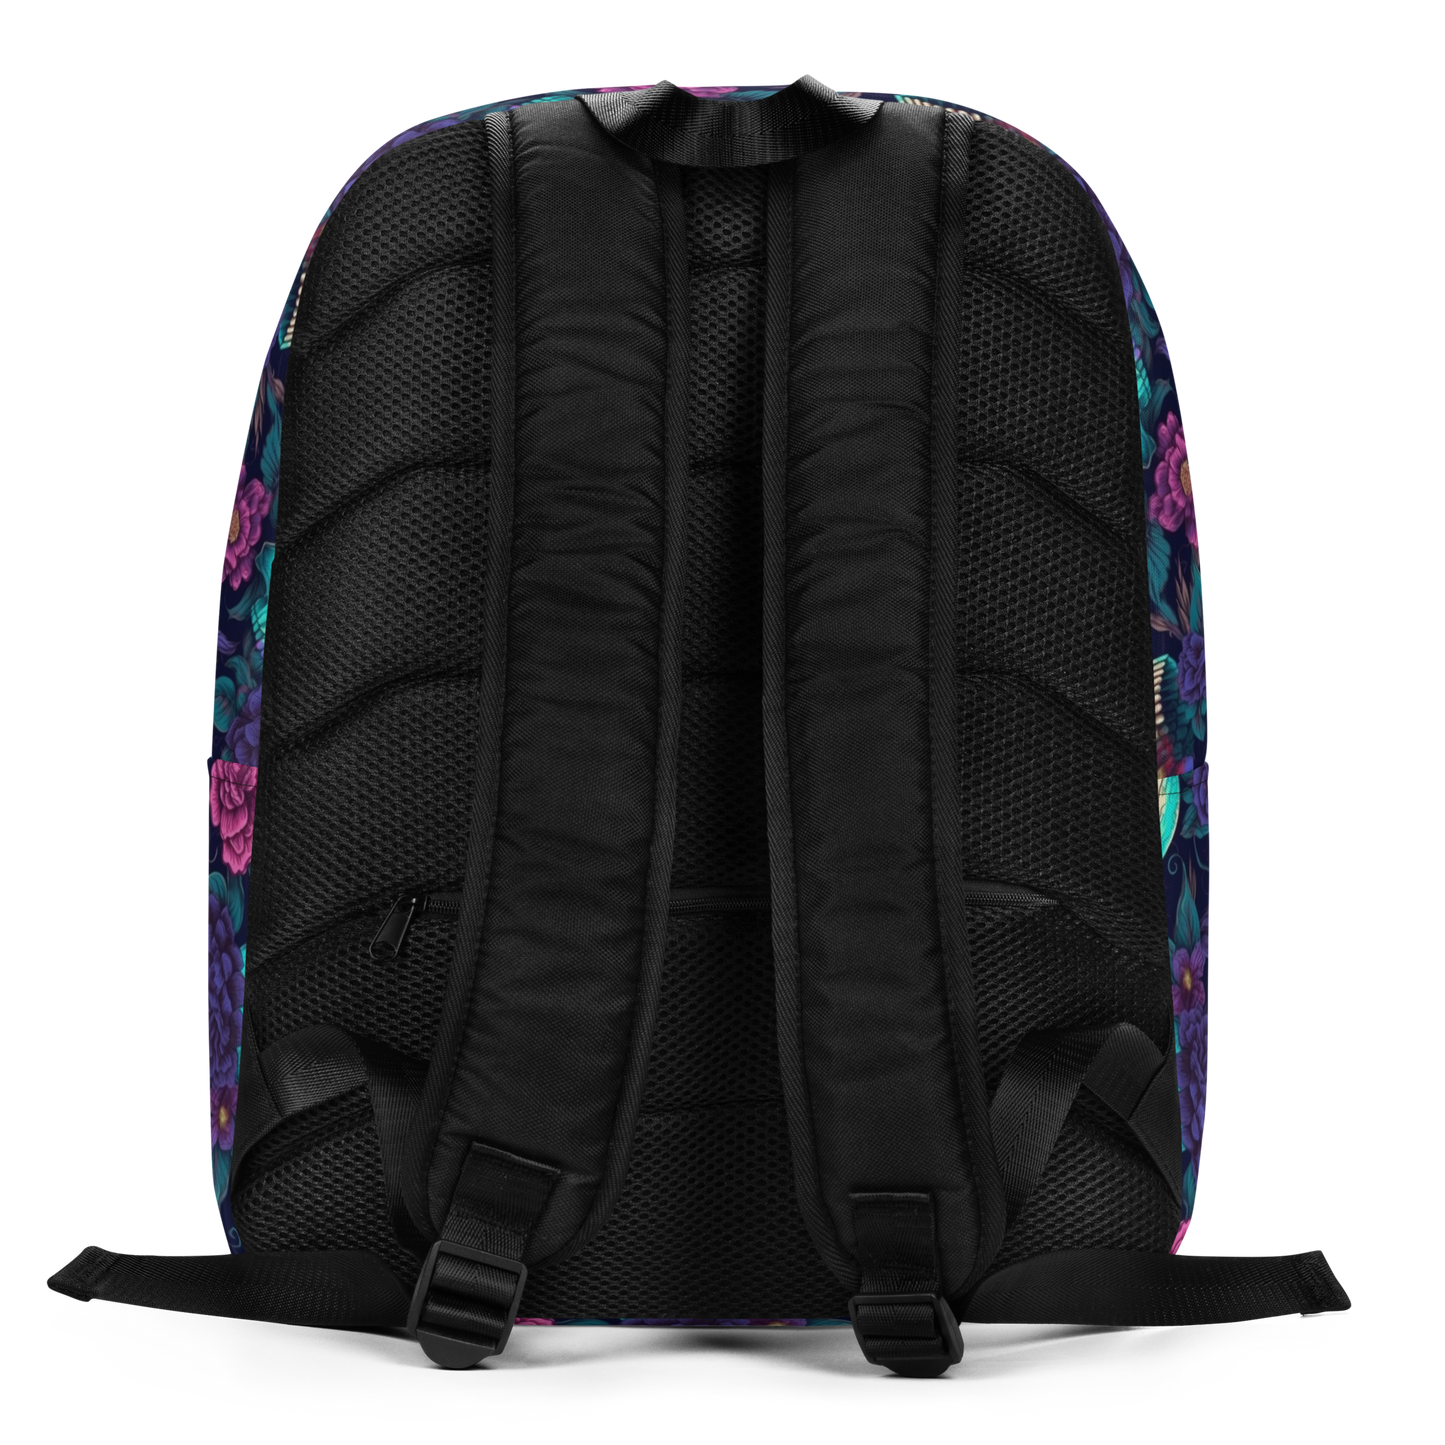 After Life Minimalist Backpack, Backpack with 15" inside pocket for Laptop, Hidden Pocket for Wallet, Lightweight well made